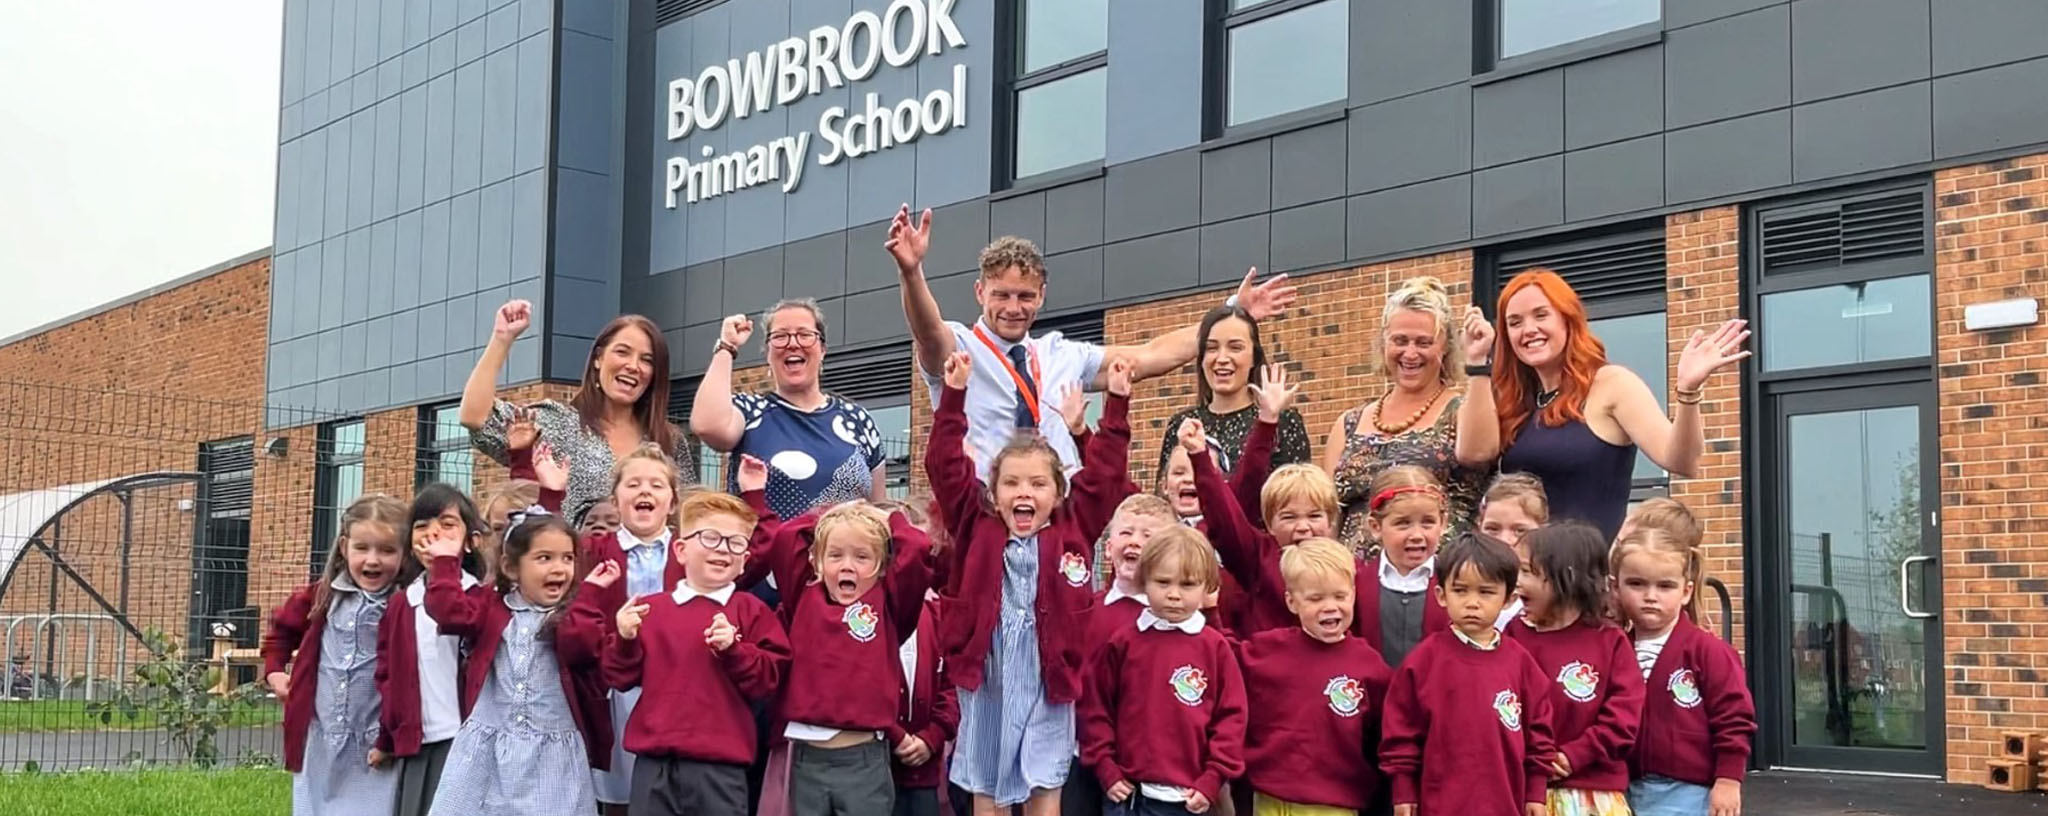 Bowbrook Primary School